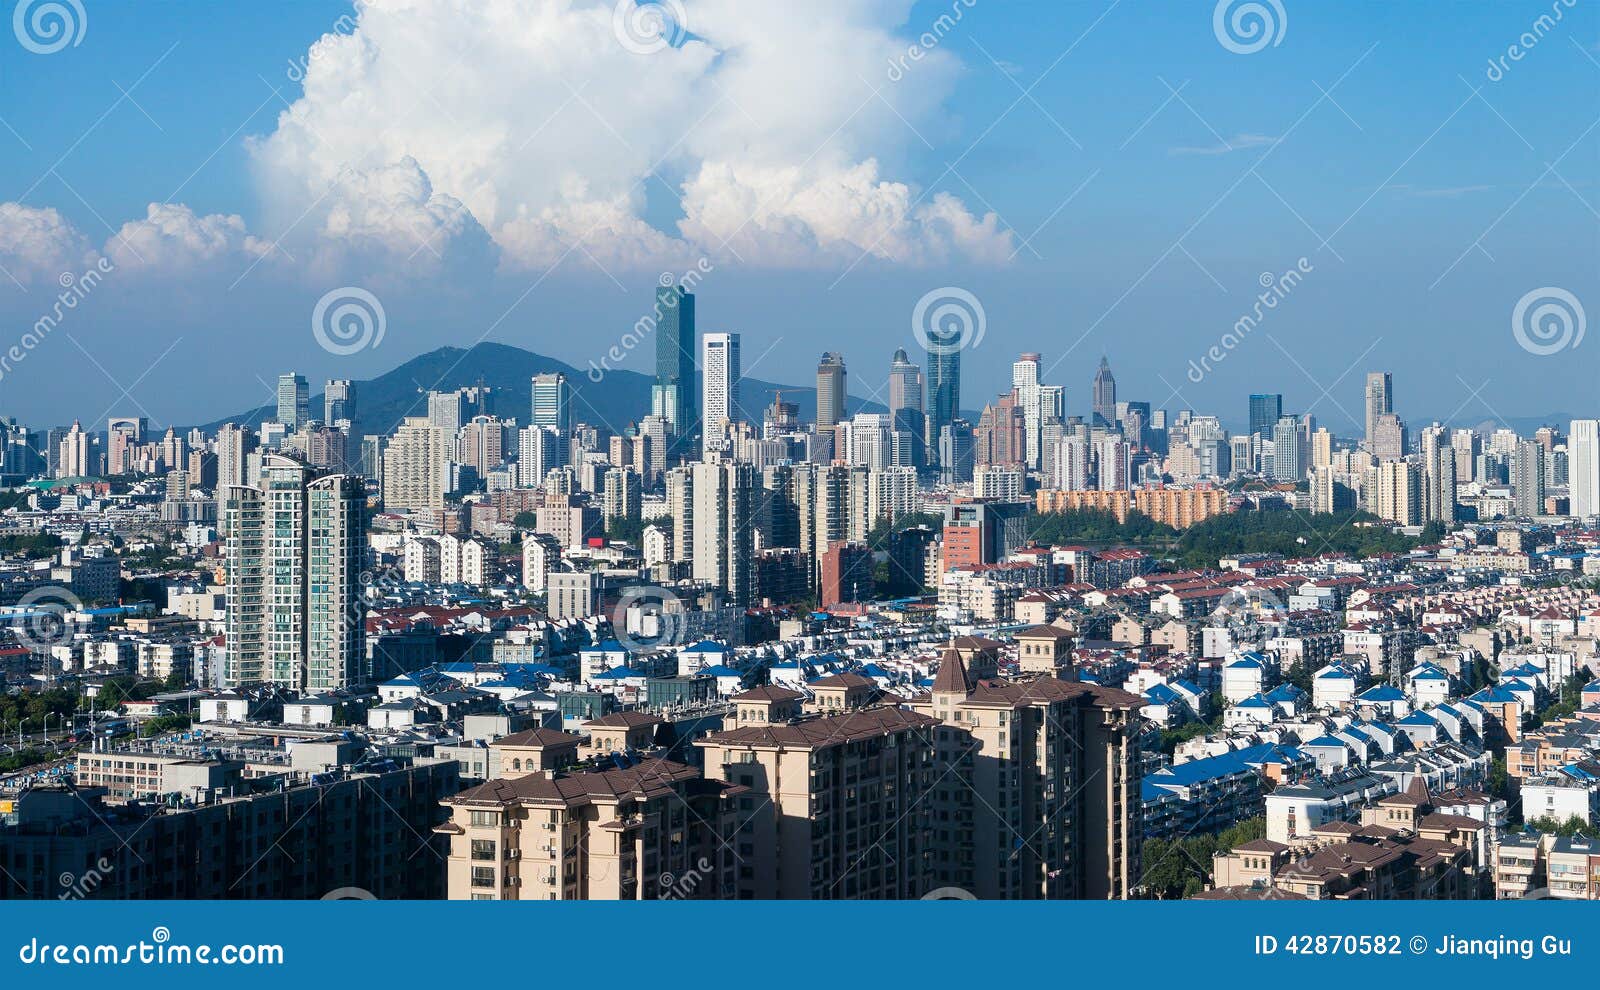 city of nanjing